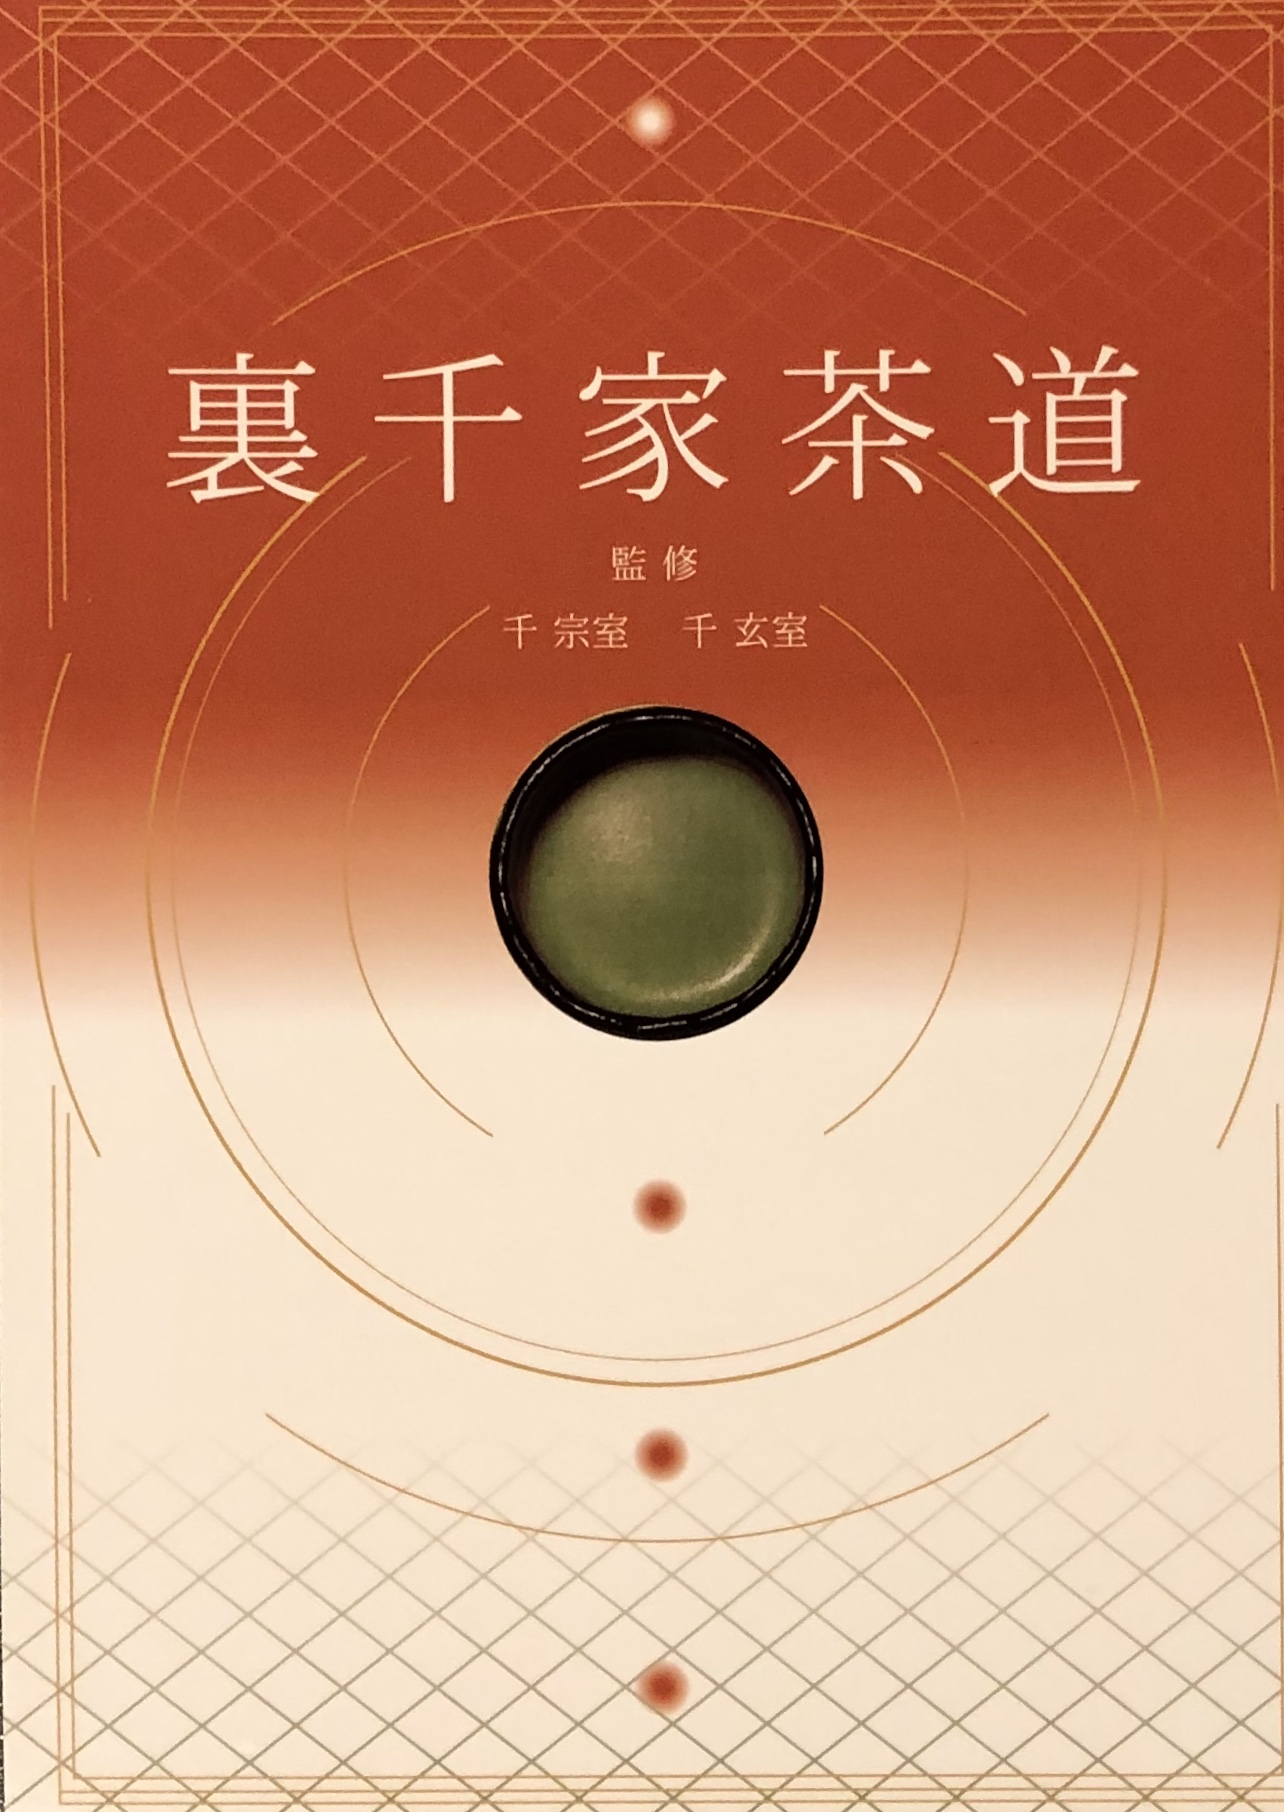 Urasenke Tee Verfahren Guidebook3 Koicha Englische Version 